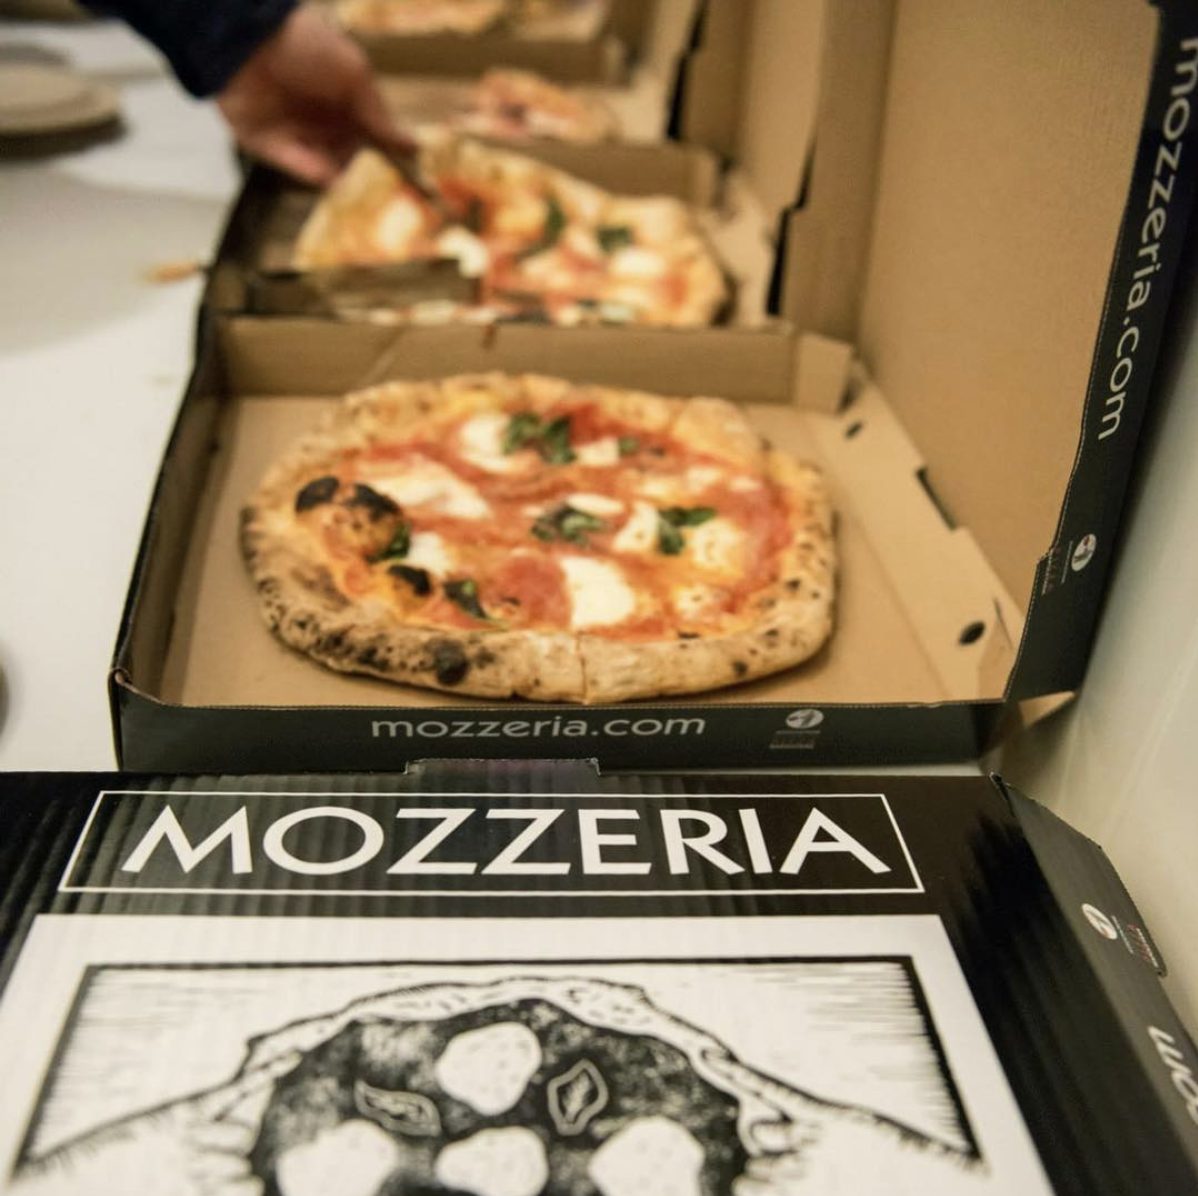 Mozzeria pizza boxes filled with fresh Margherita pizza.